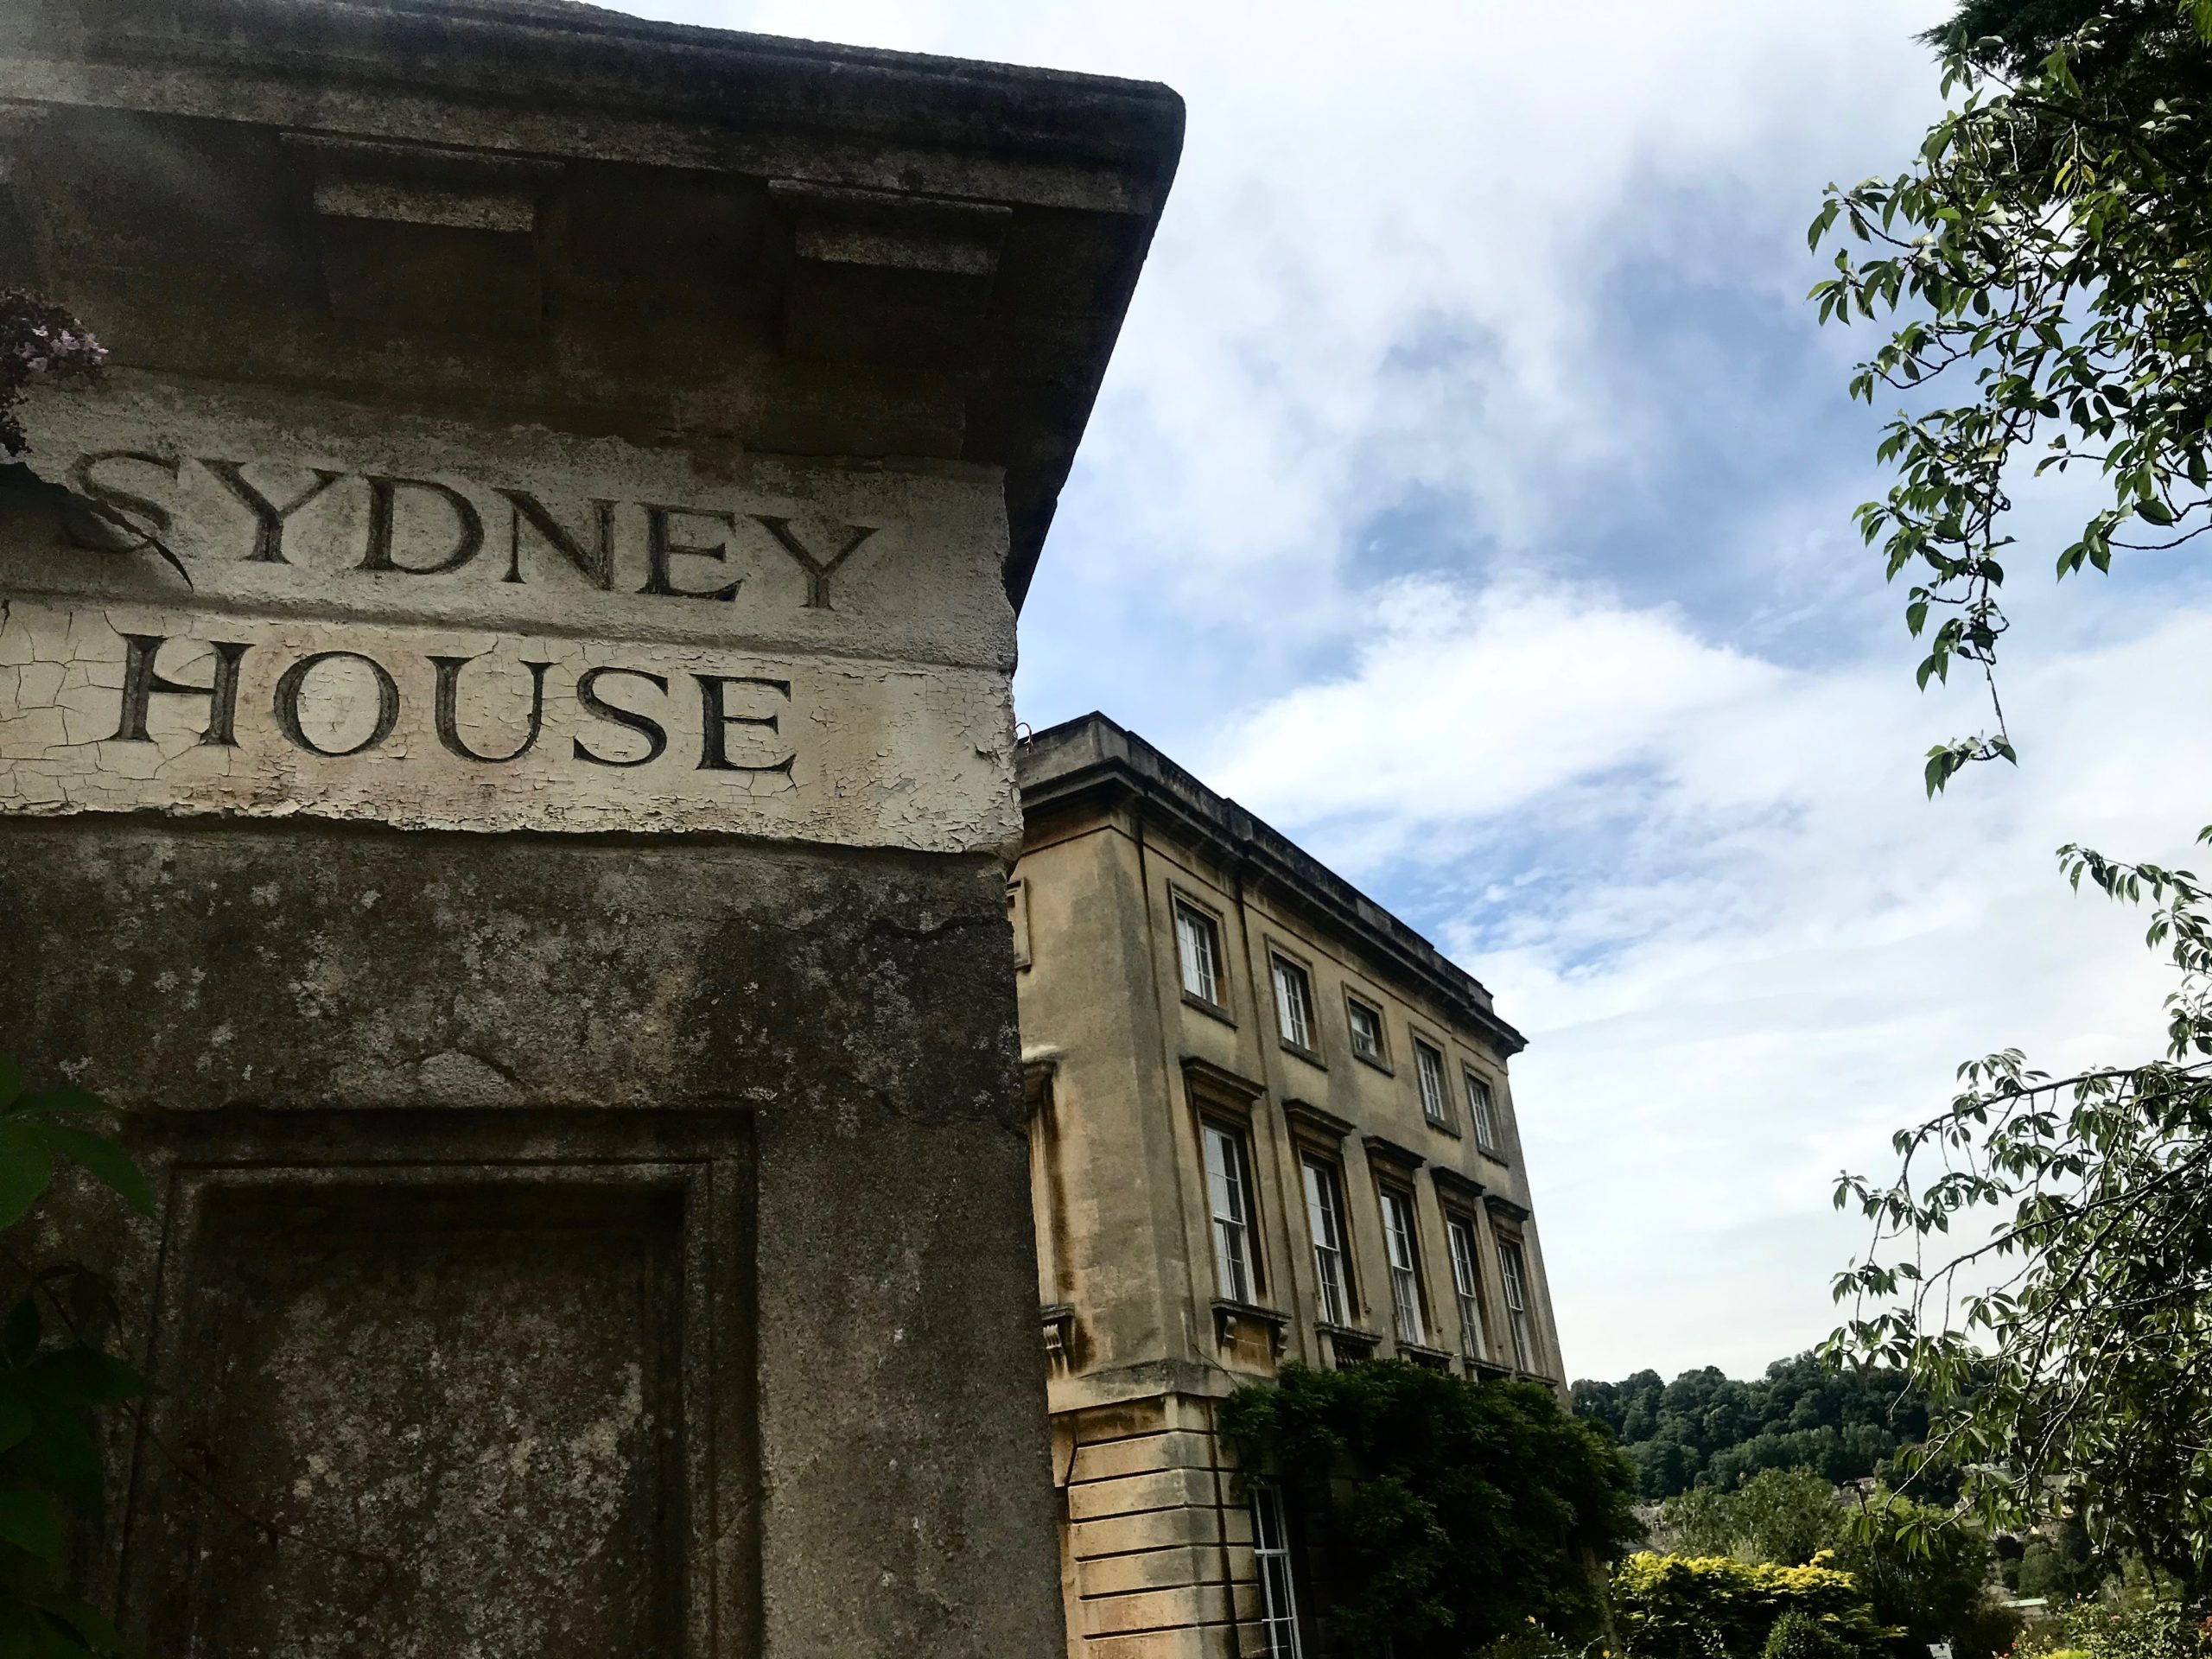 Sydney House, Bath